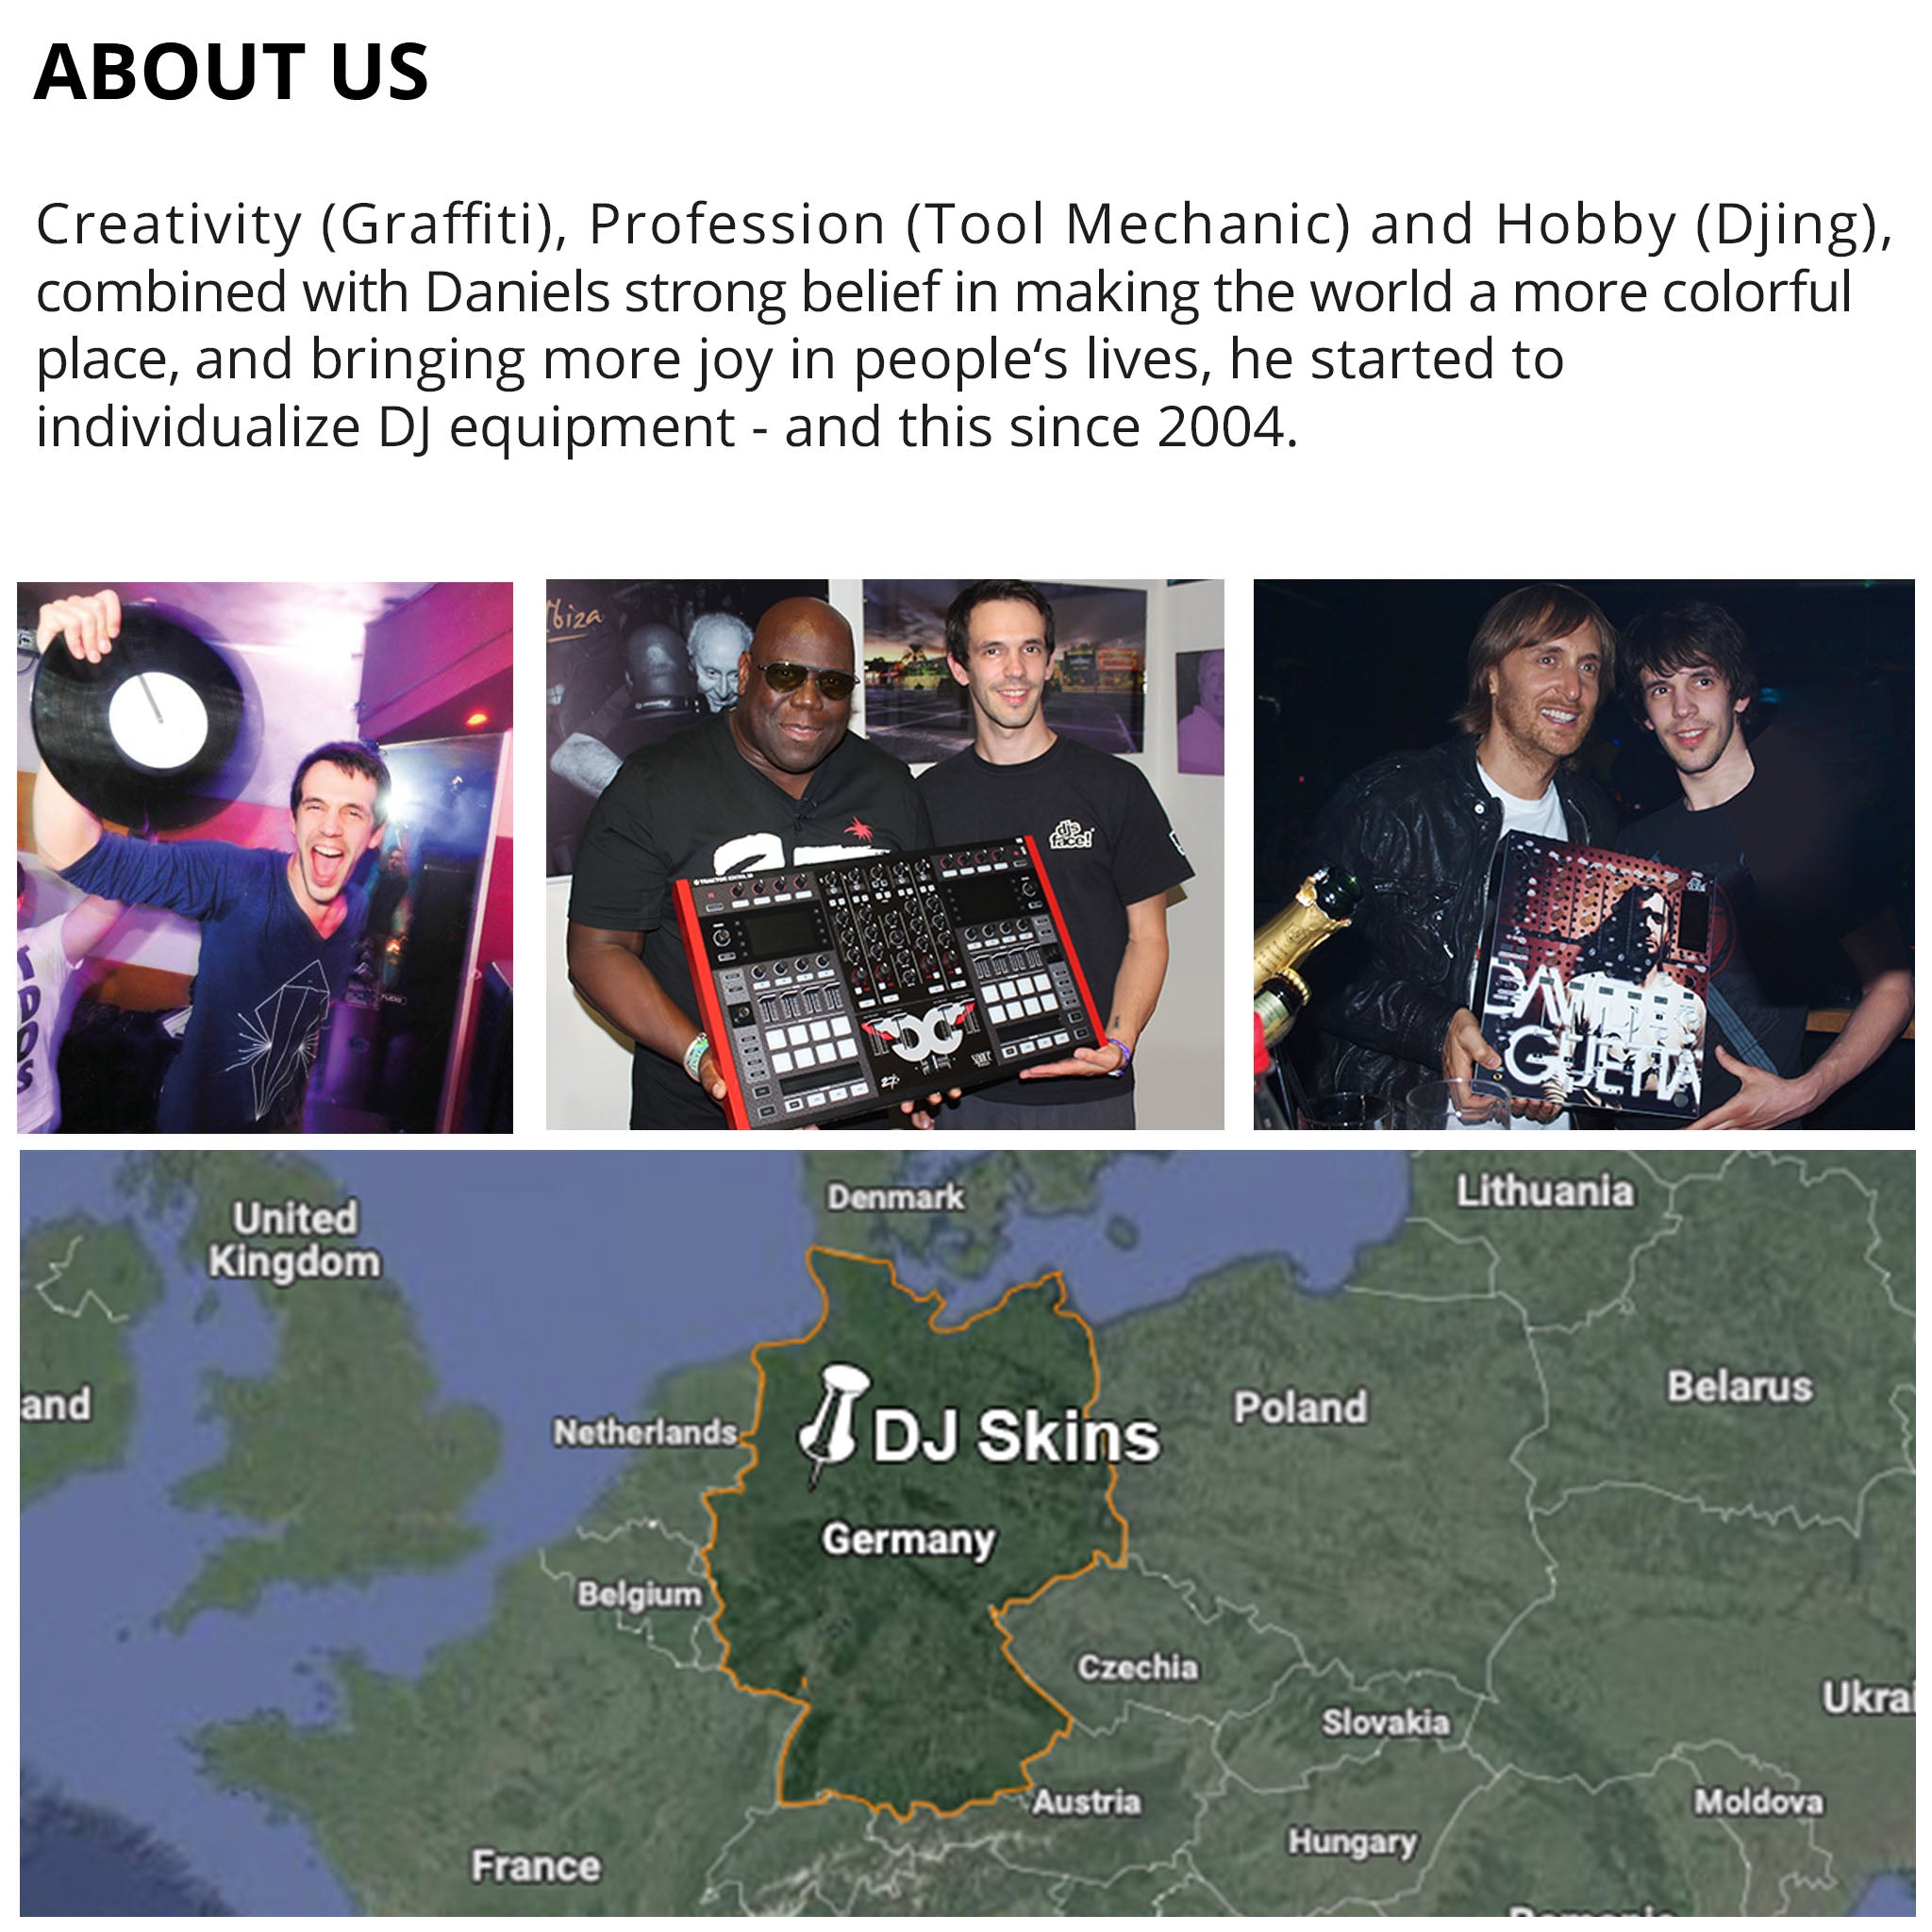 Pioneer DJ DDJ FLX10 Skin Henna Rainbow